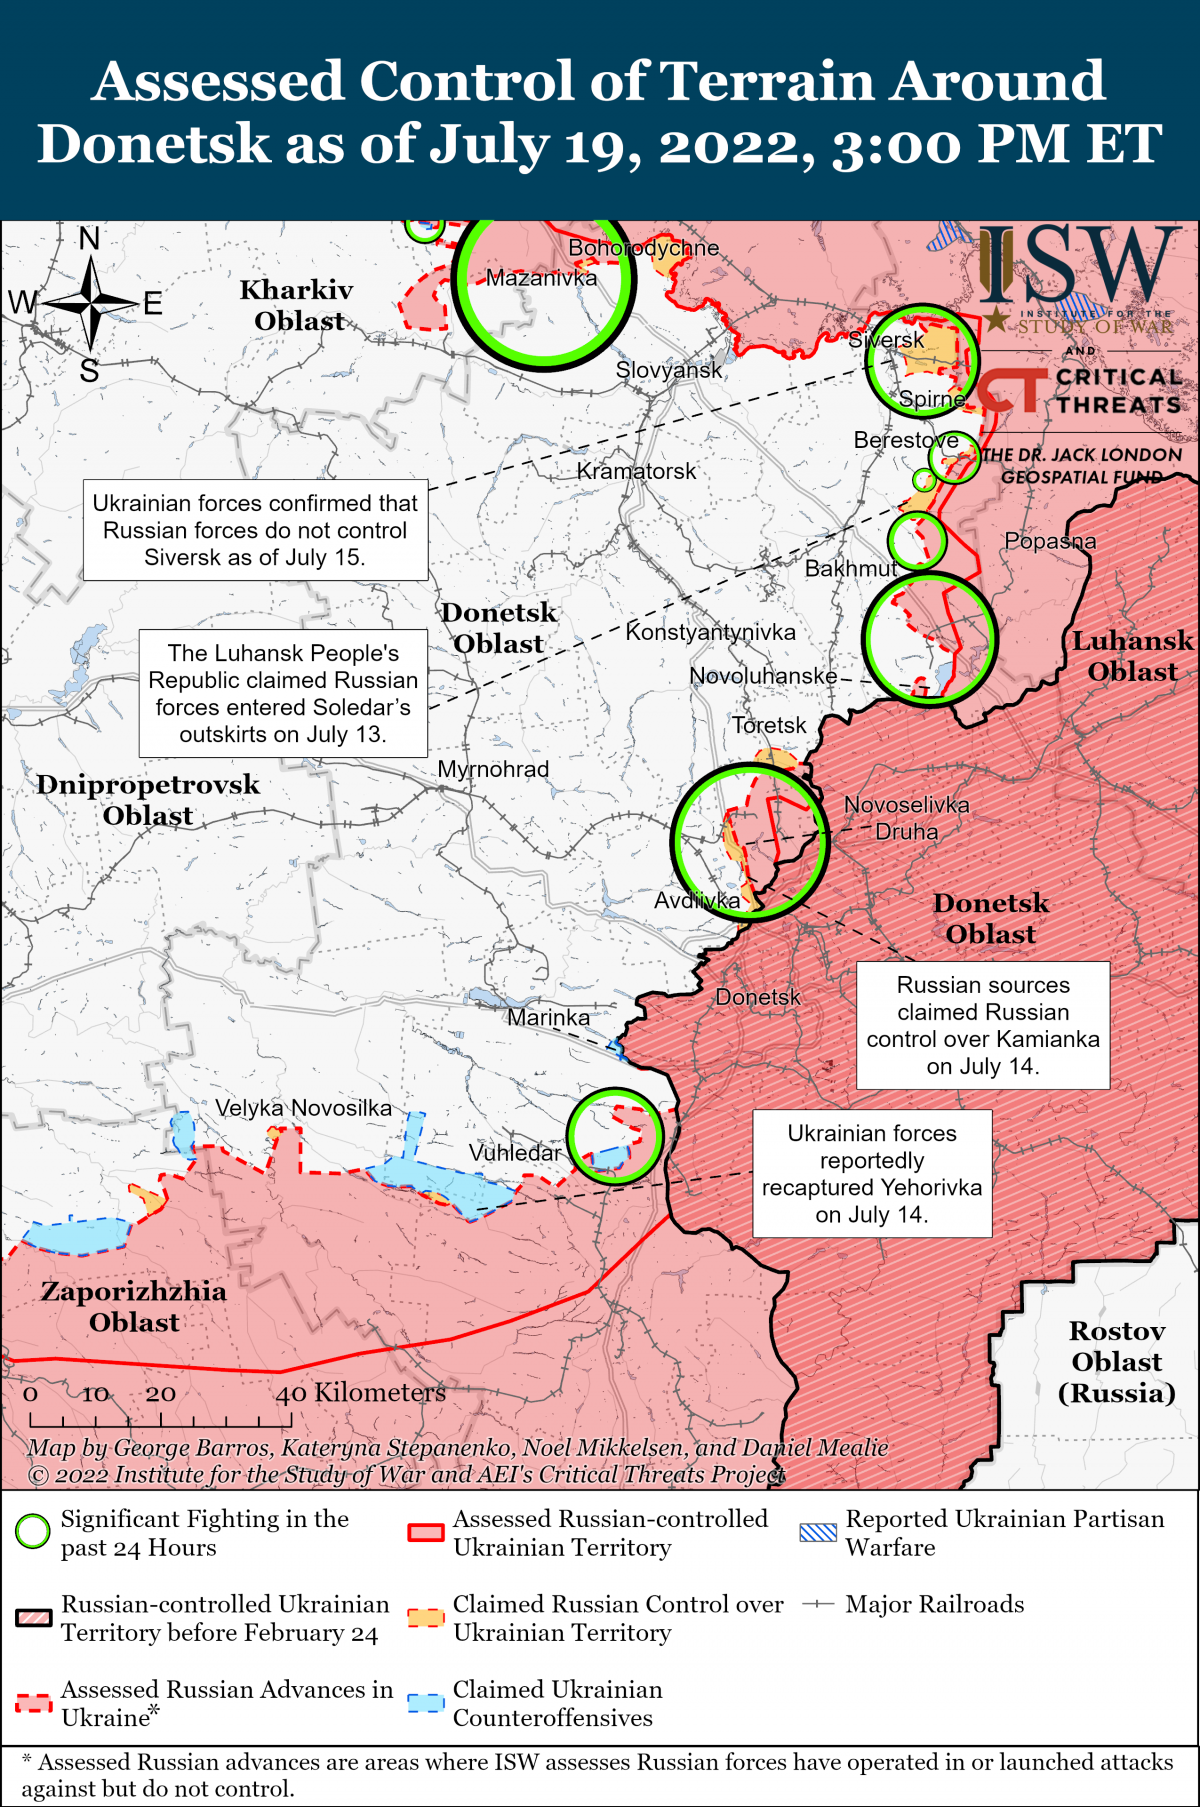  Front line în Donbass potrivit analiștilor americani/foto: ISW 